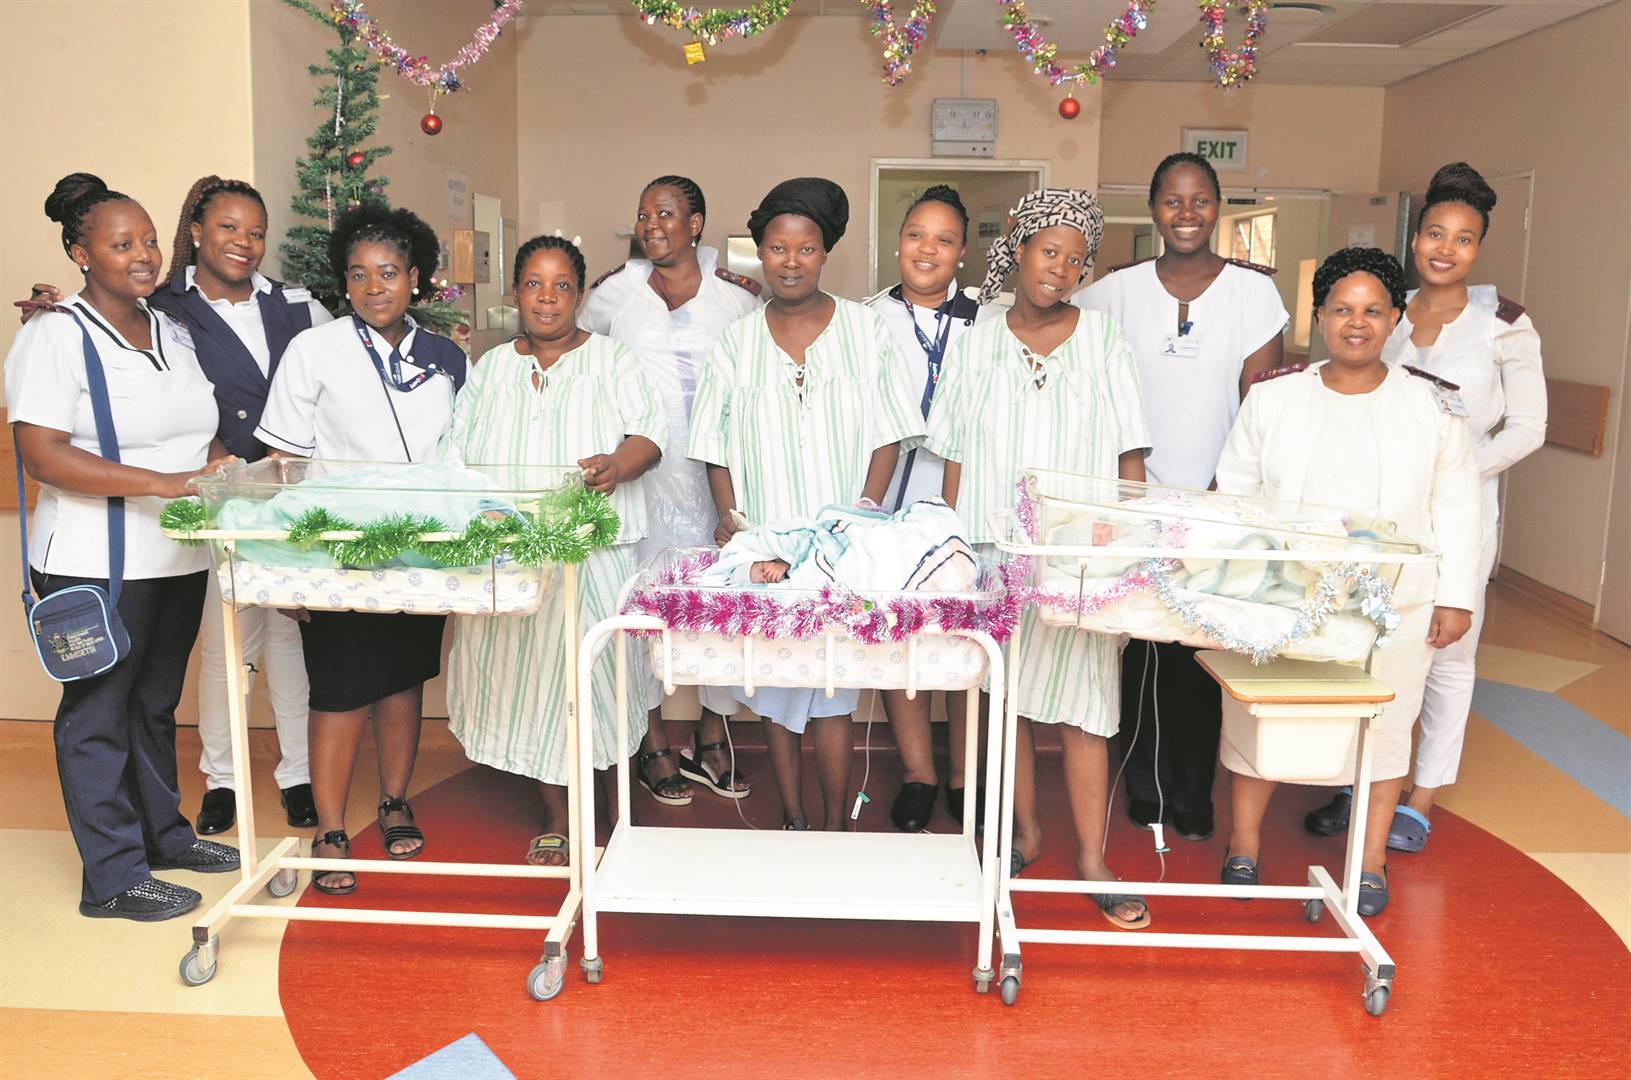 Mums Charity Putseni, Montsho Moloi and Roda Goeieman (front) joined by nurses from Moses Kotane Hospital. Photo by Rapula Mancai